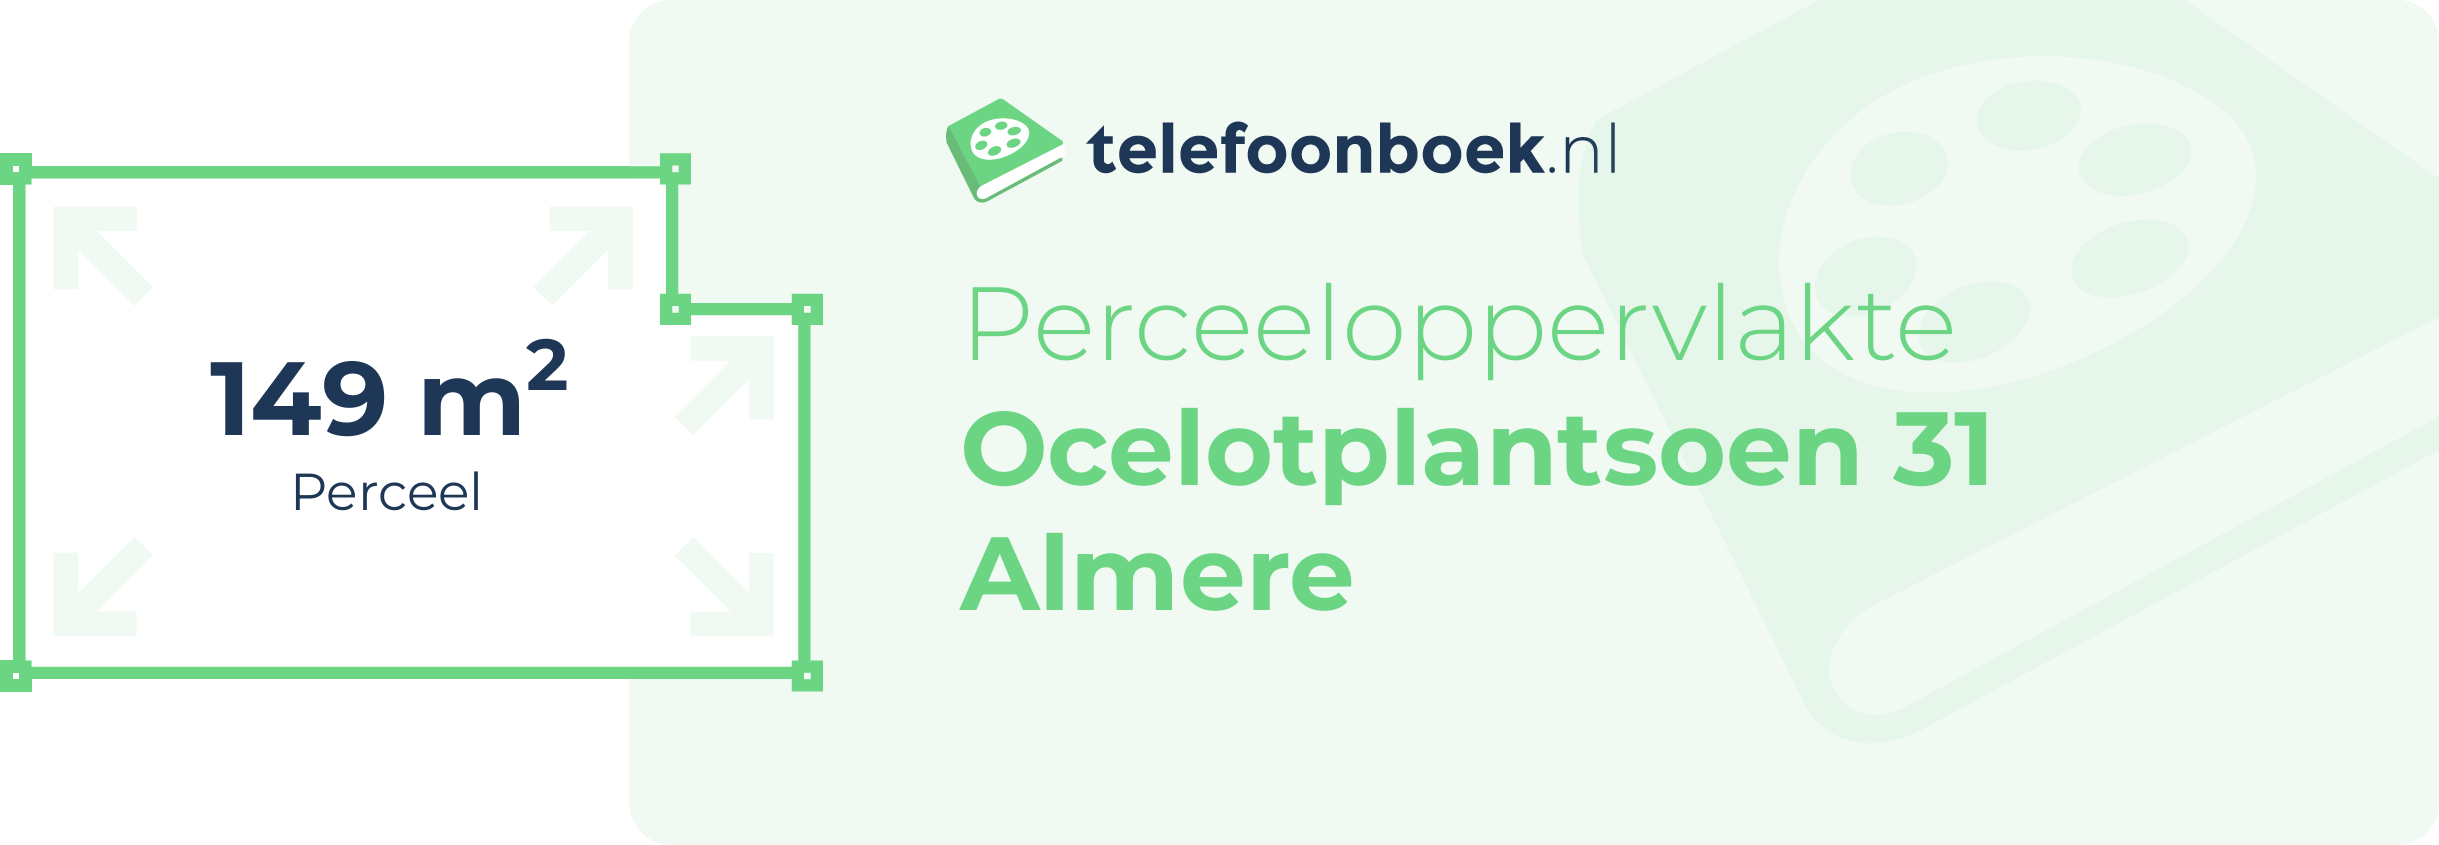 Perceeloppervlakte Ocelotplantsoen 31 Almere